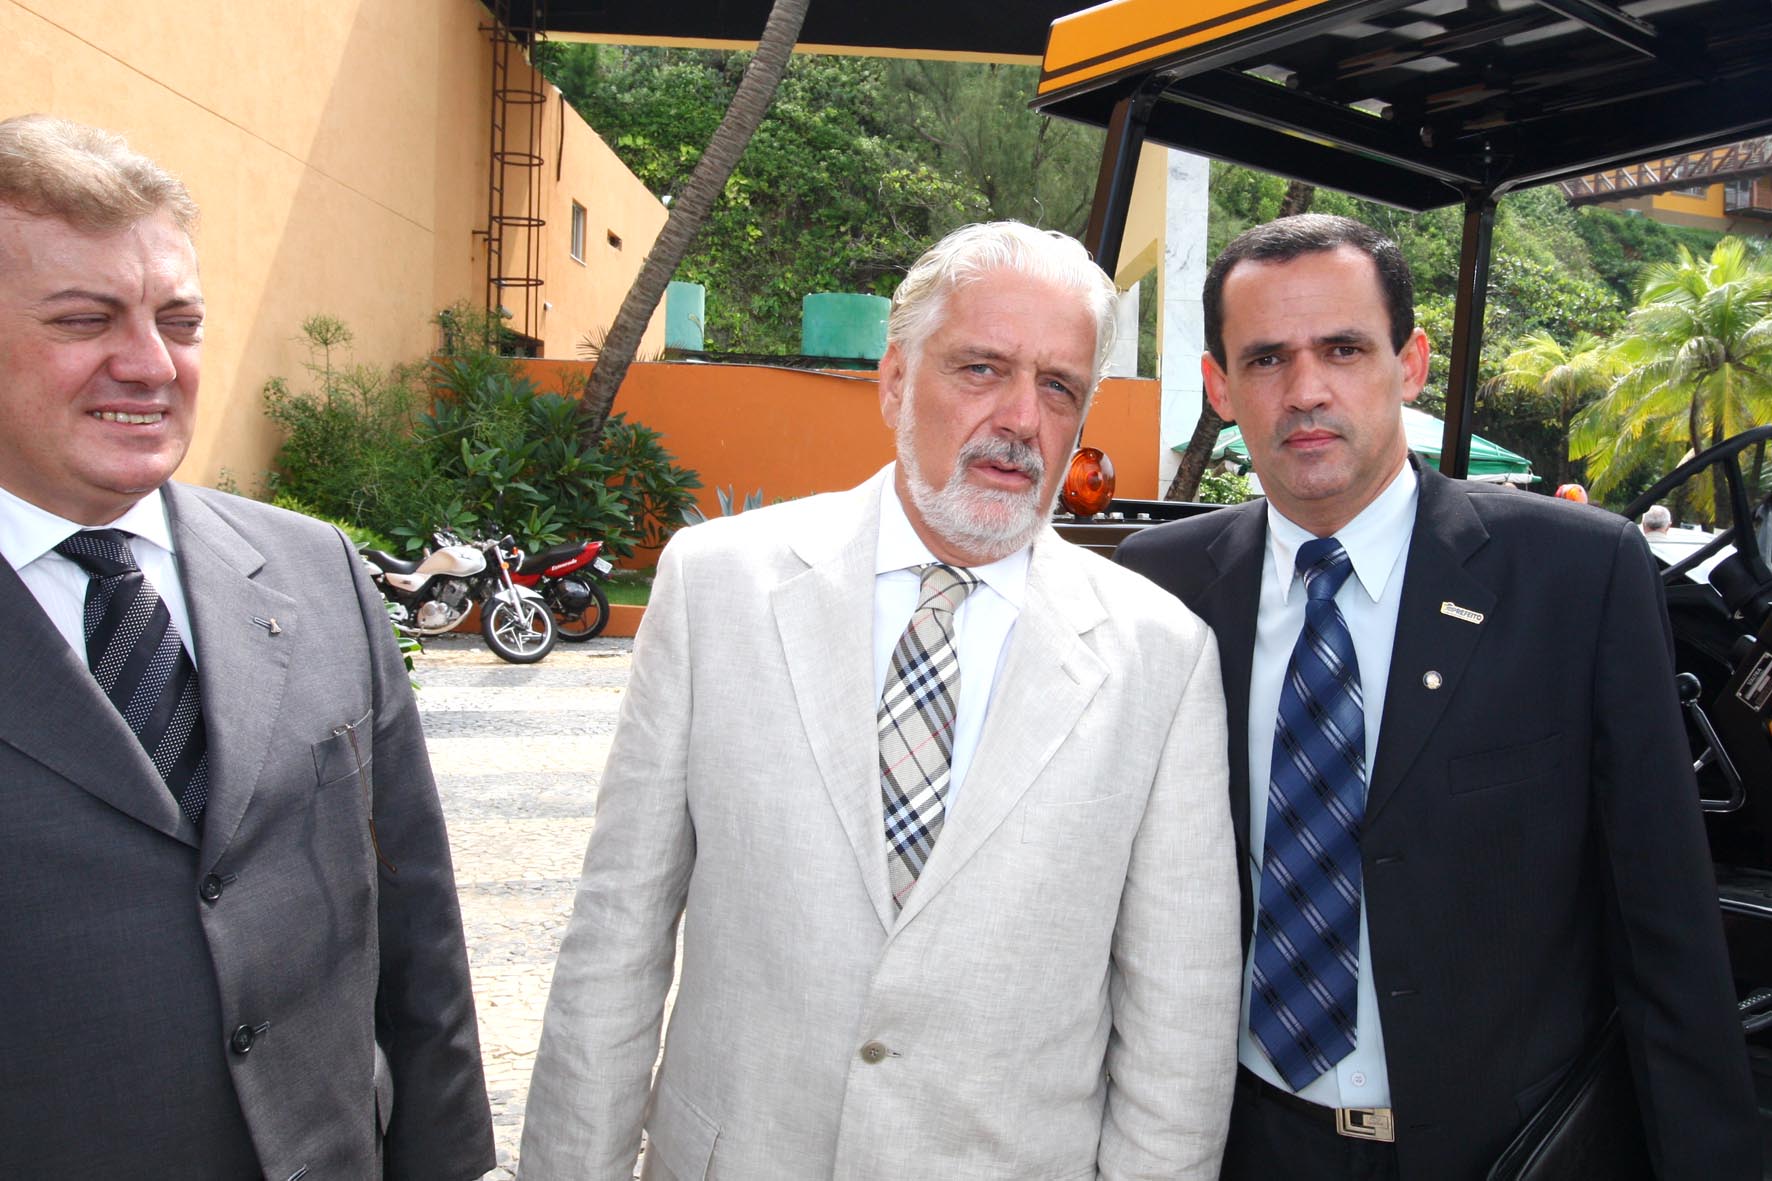 three men in suits standing near a golf cart